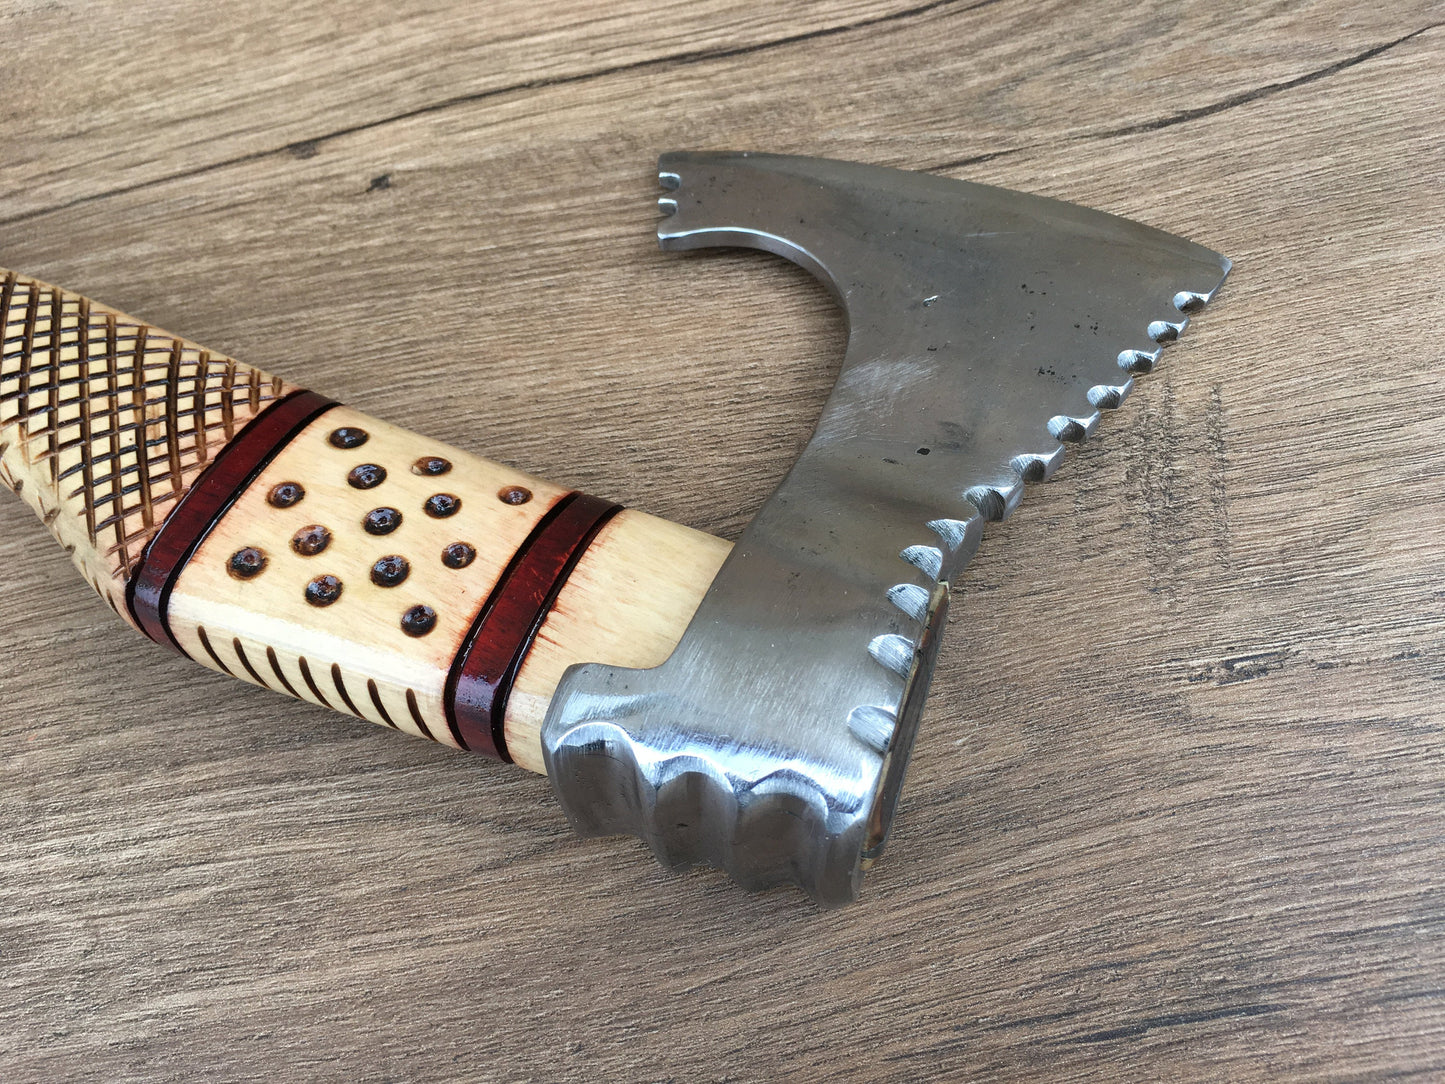 Viking axe, tomahawk, hatchet, mens gifts, medieval axe, viking weapons, viking camp, axe, viking camp kit, reenactment medieval, iron gifts